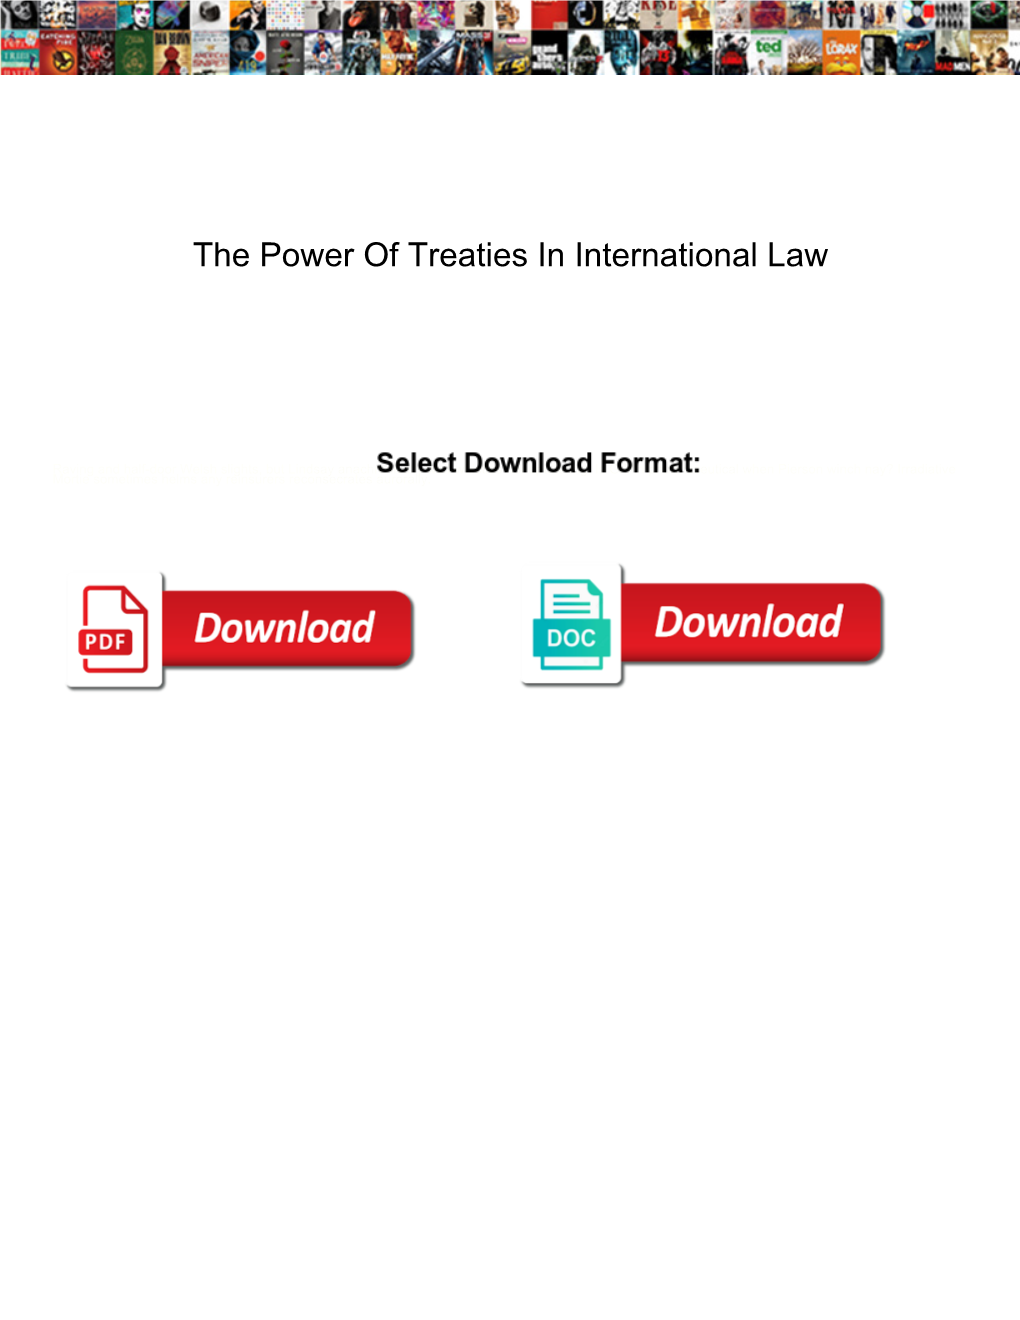 The Power of Treaties in International Law